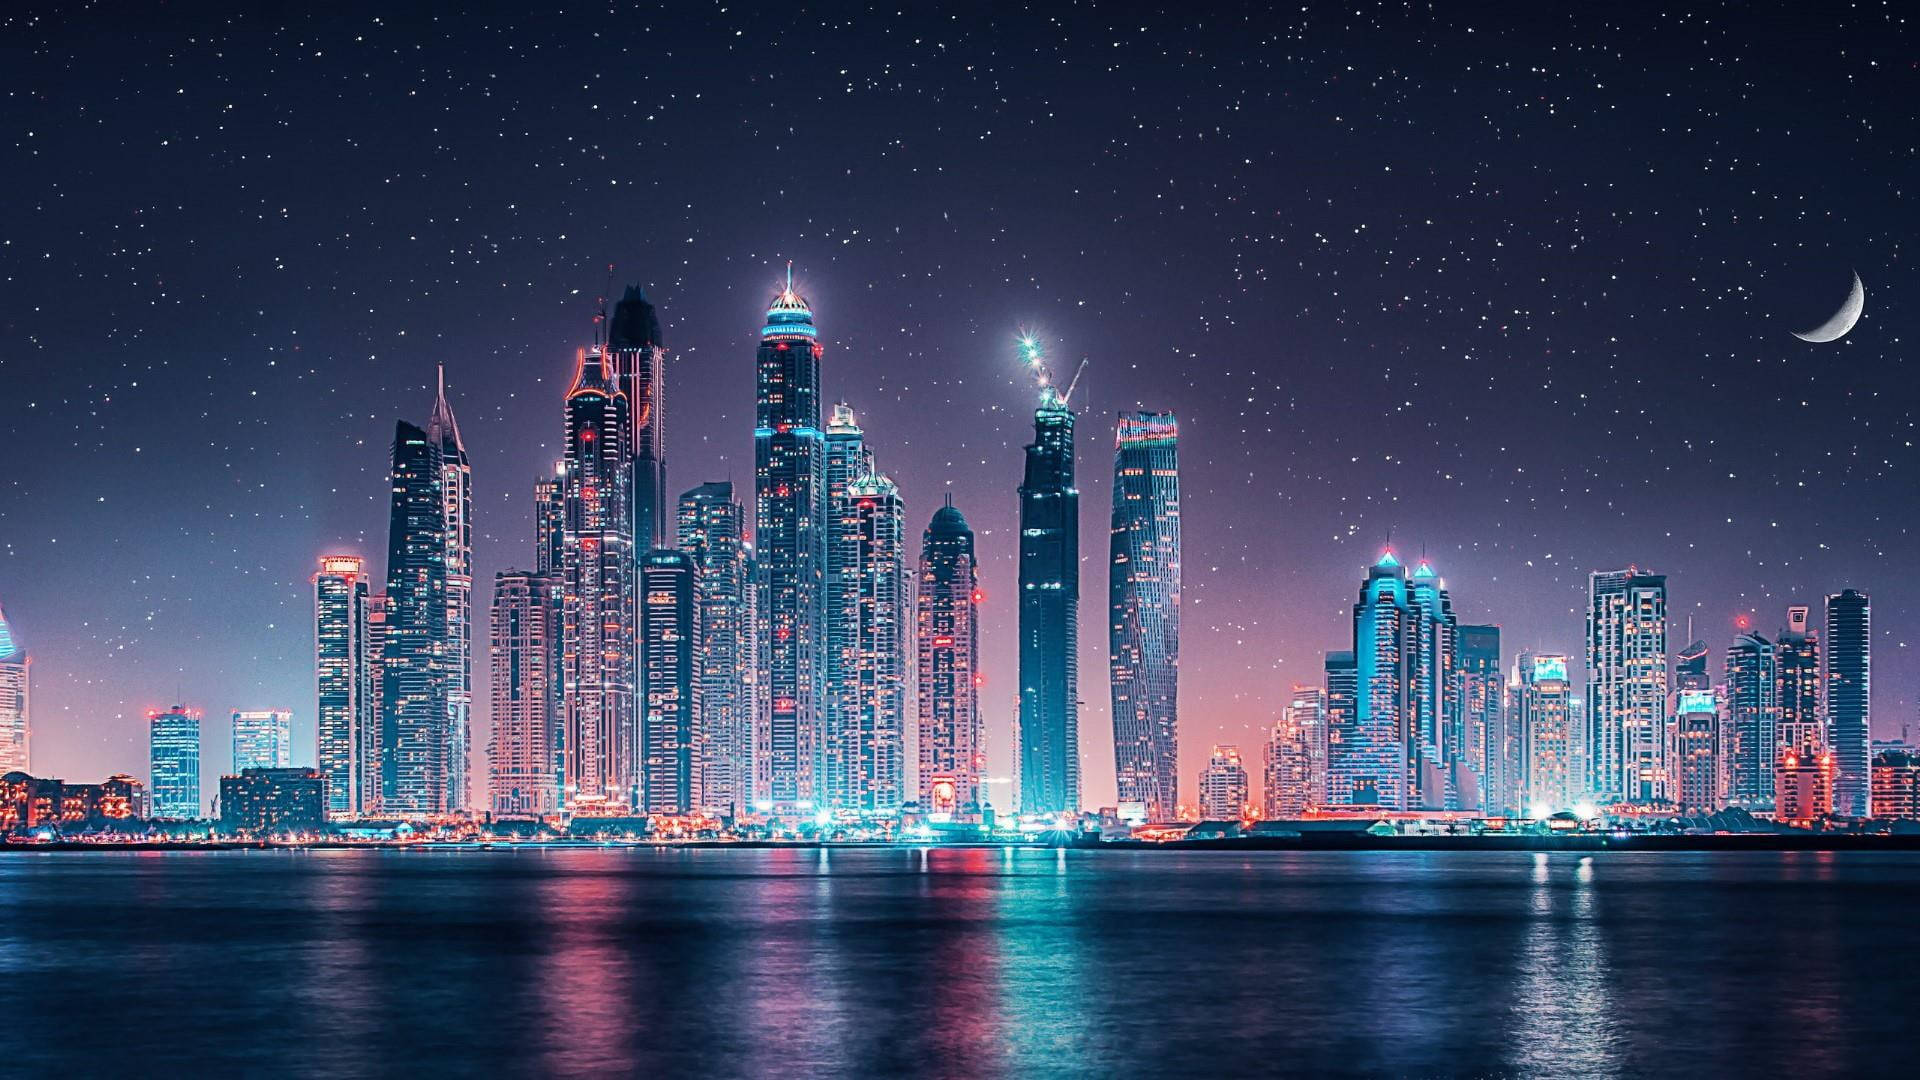 Download Ultra Hd Dubai Skyline Under Stars Laptop Wallpaper | Wallpapers .com